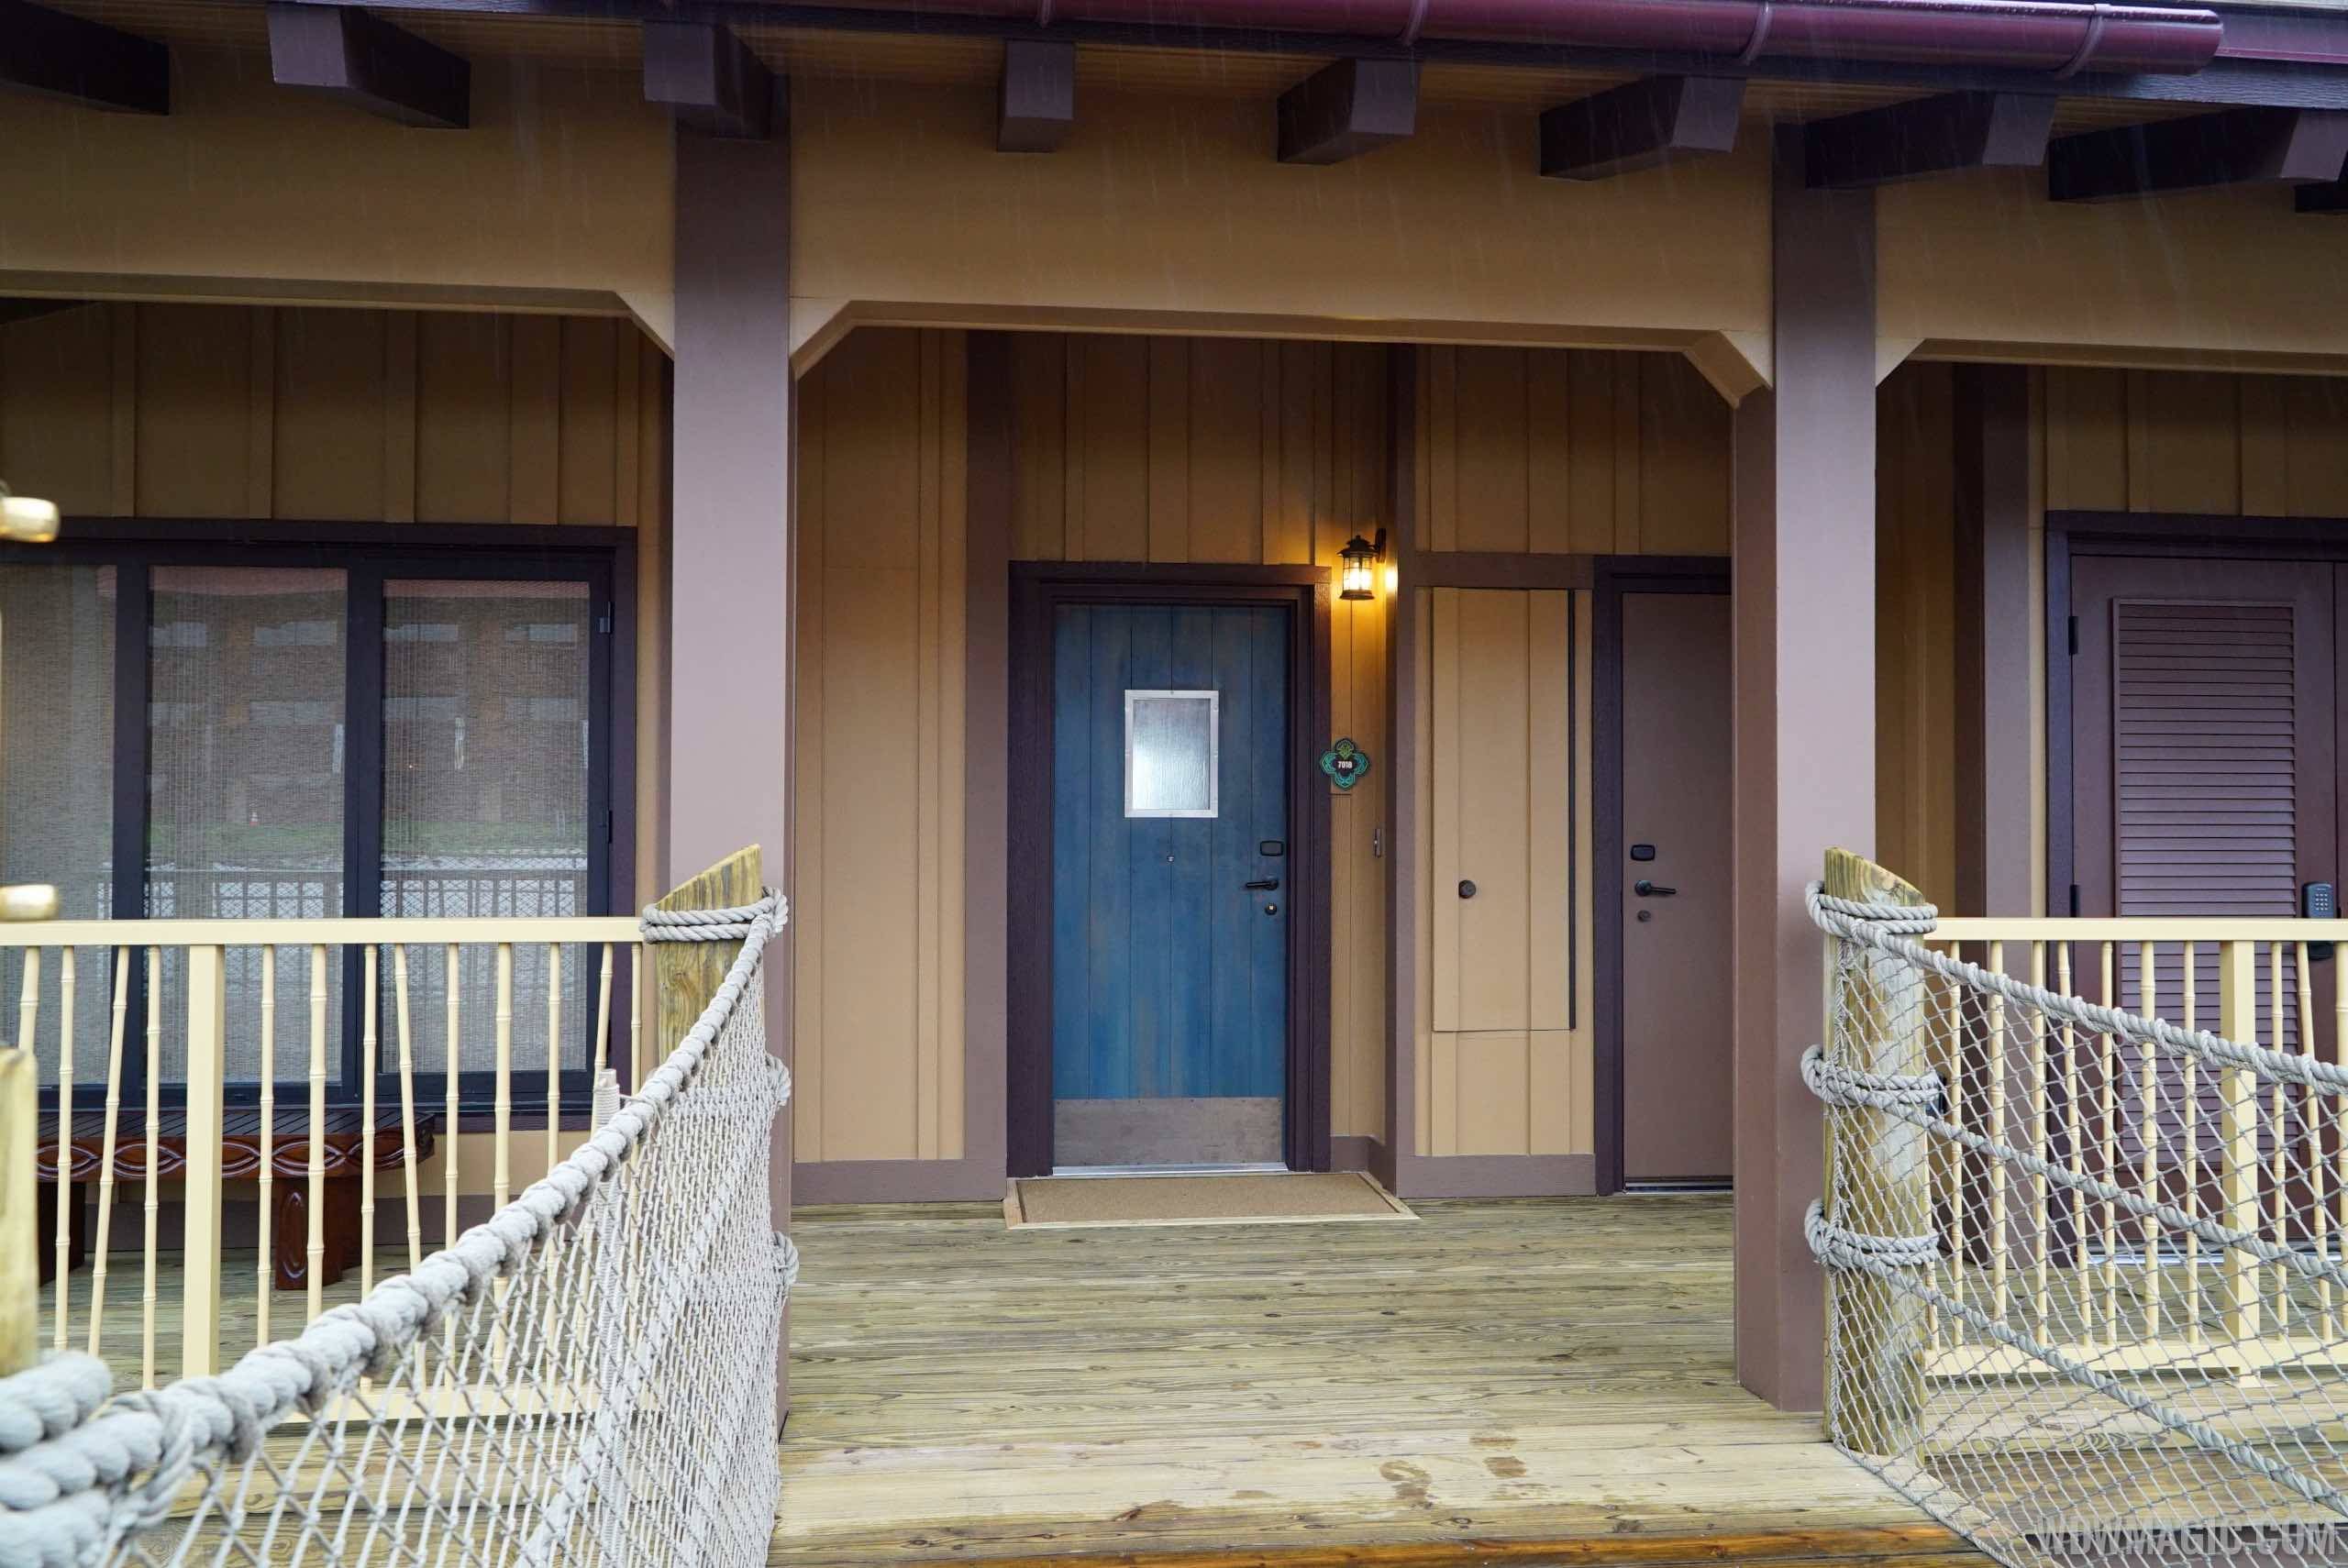 Disney's Polynesian Village Resort Bora Bora Bungalow - Entrance